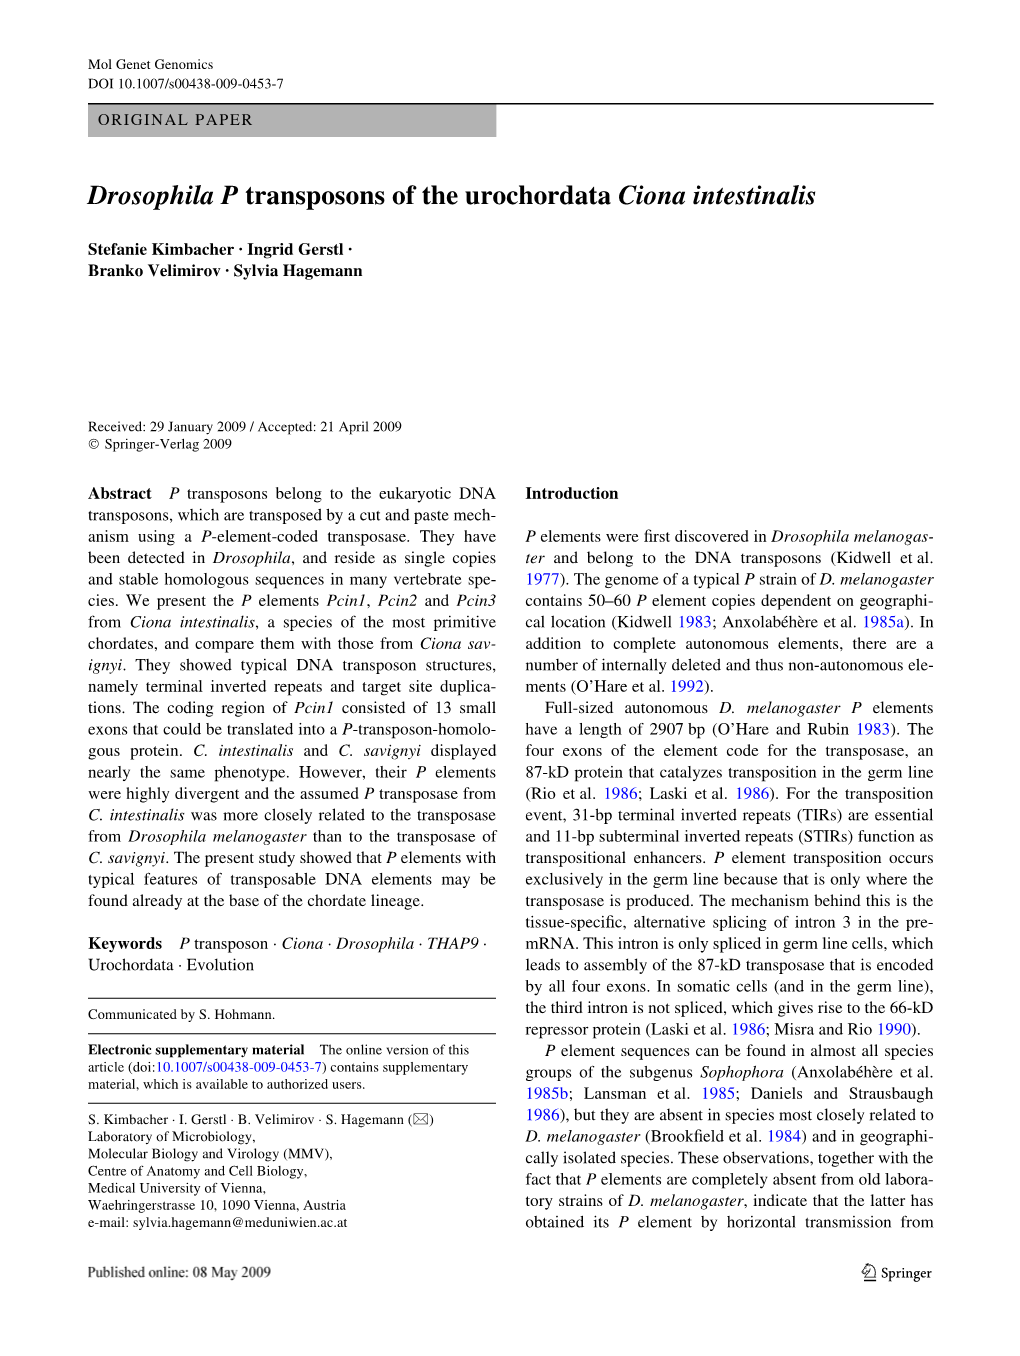 Drosophila P Transposons of the Urochordata Ciona Intestinalis